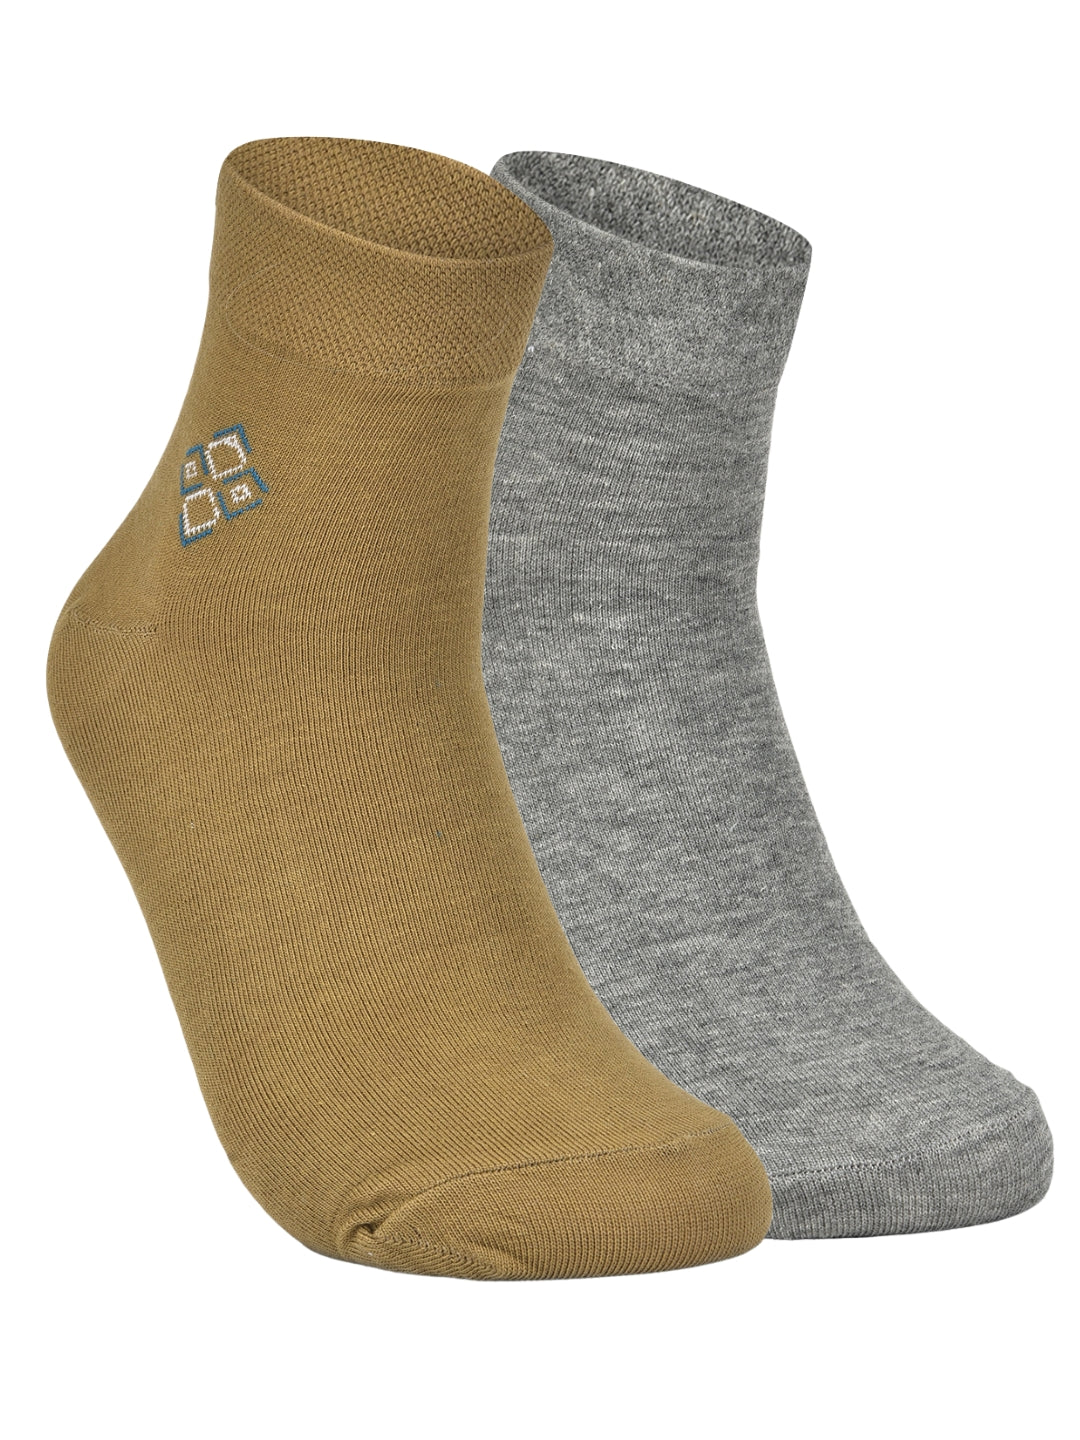 Cobb Multicolor Half Ankle Socks (Pack of 2) Assorted 2